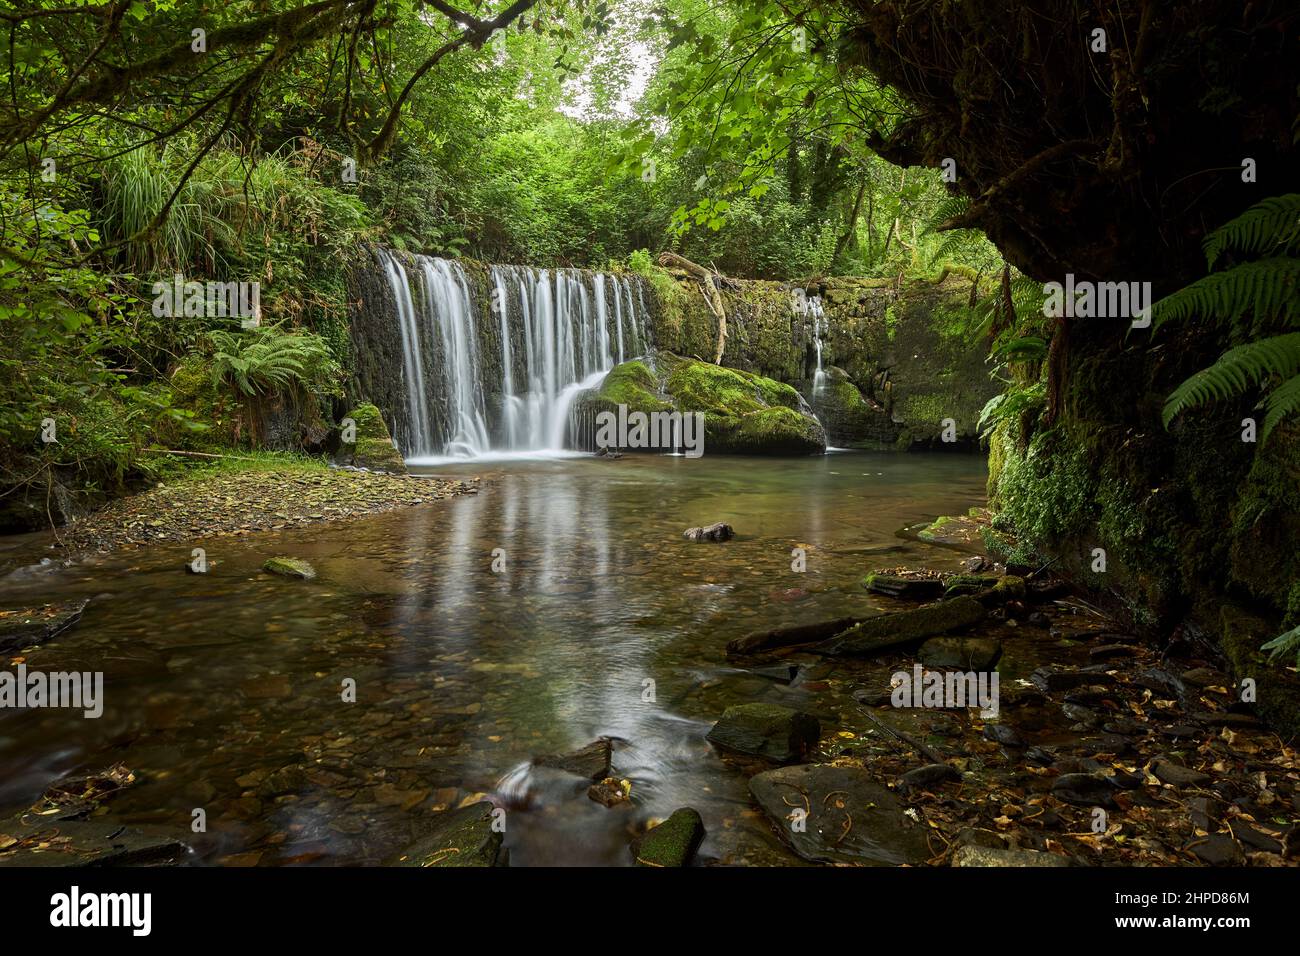 San Pedro de Incio waterfall in a forest in Galicia, Spain Stock Photo